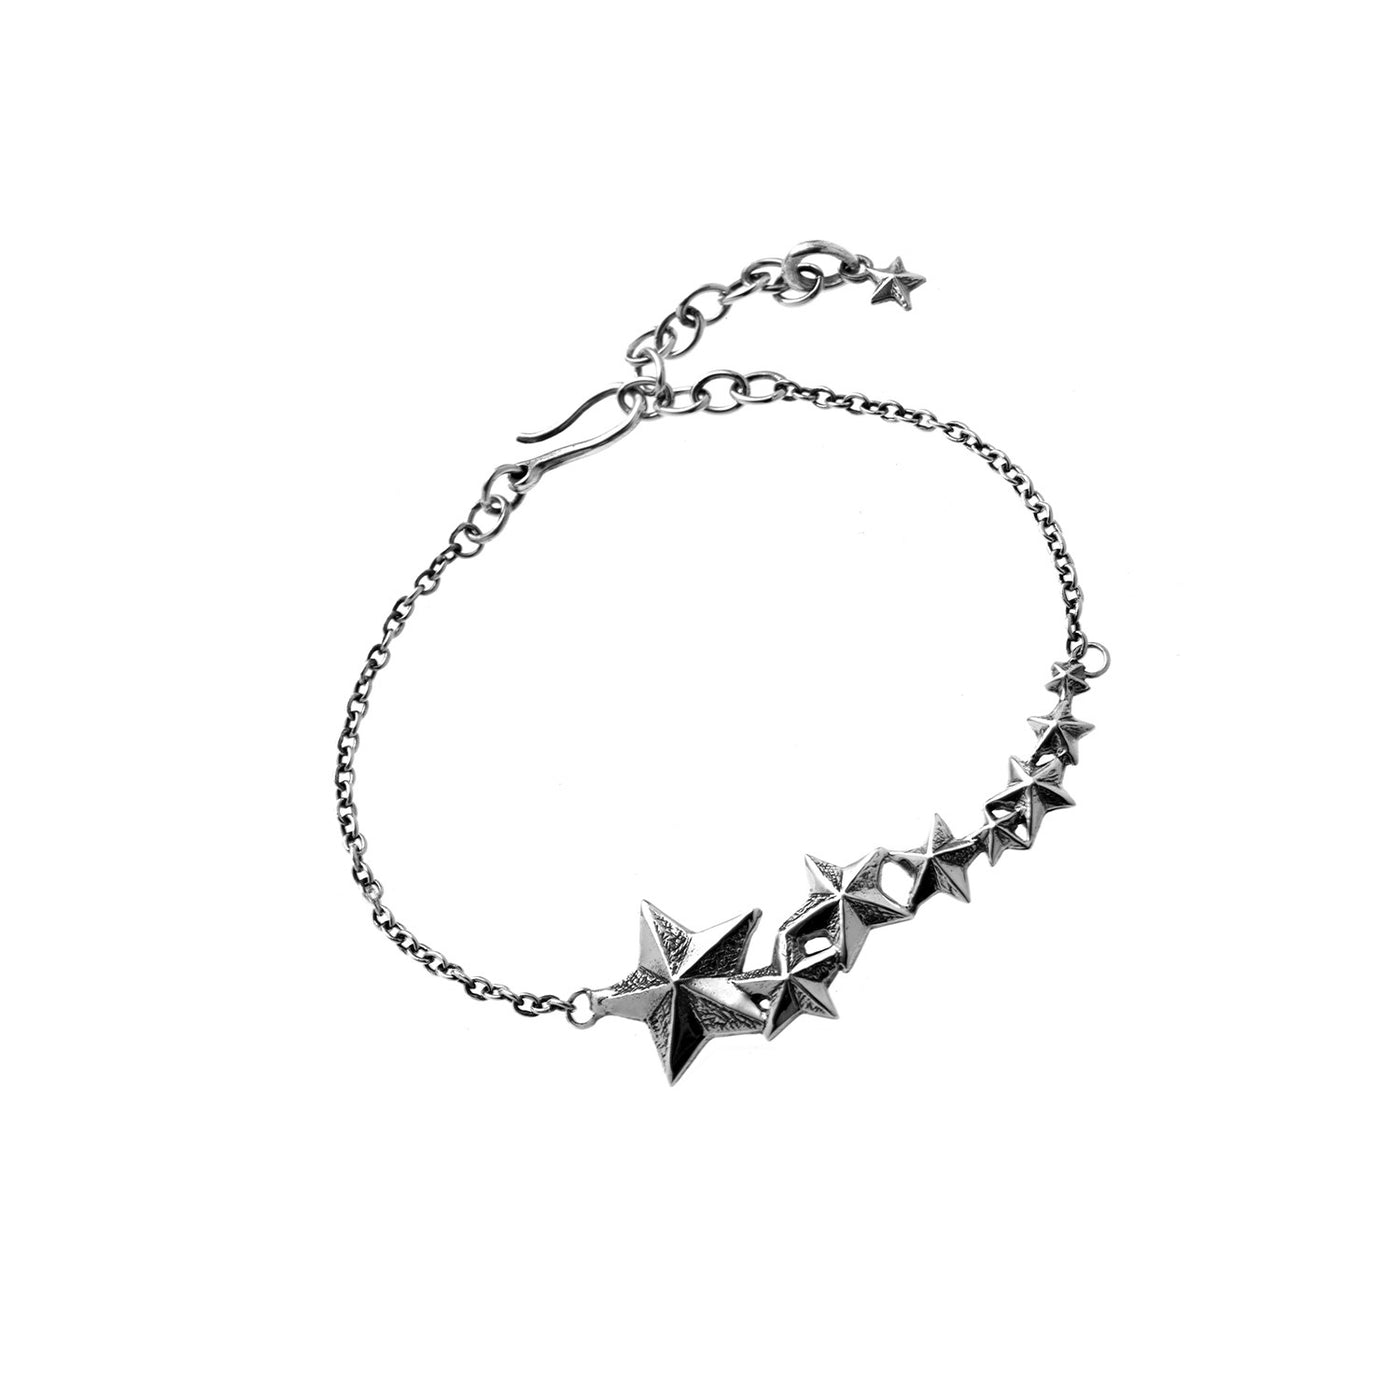 Rock Star Sterling Silver Bracelet - Cynthia Gale New York - 1